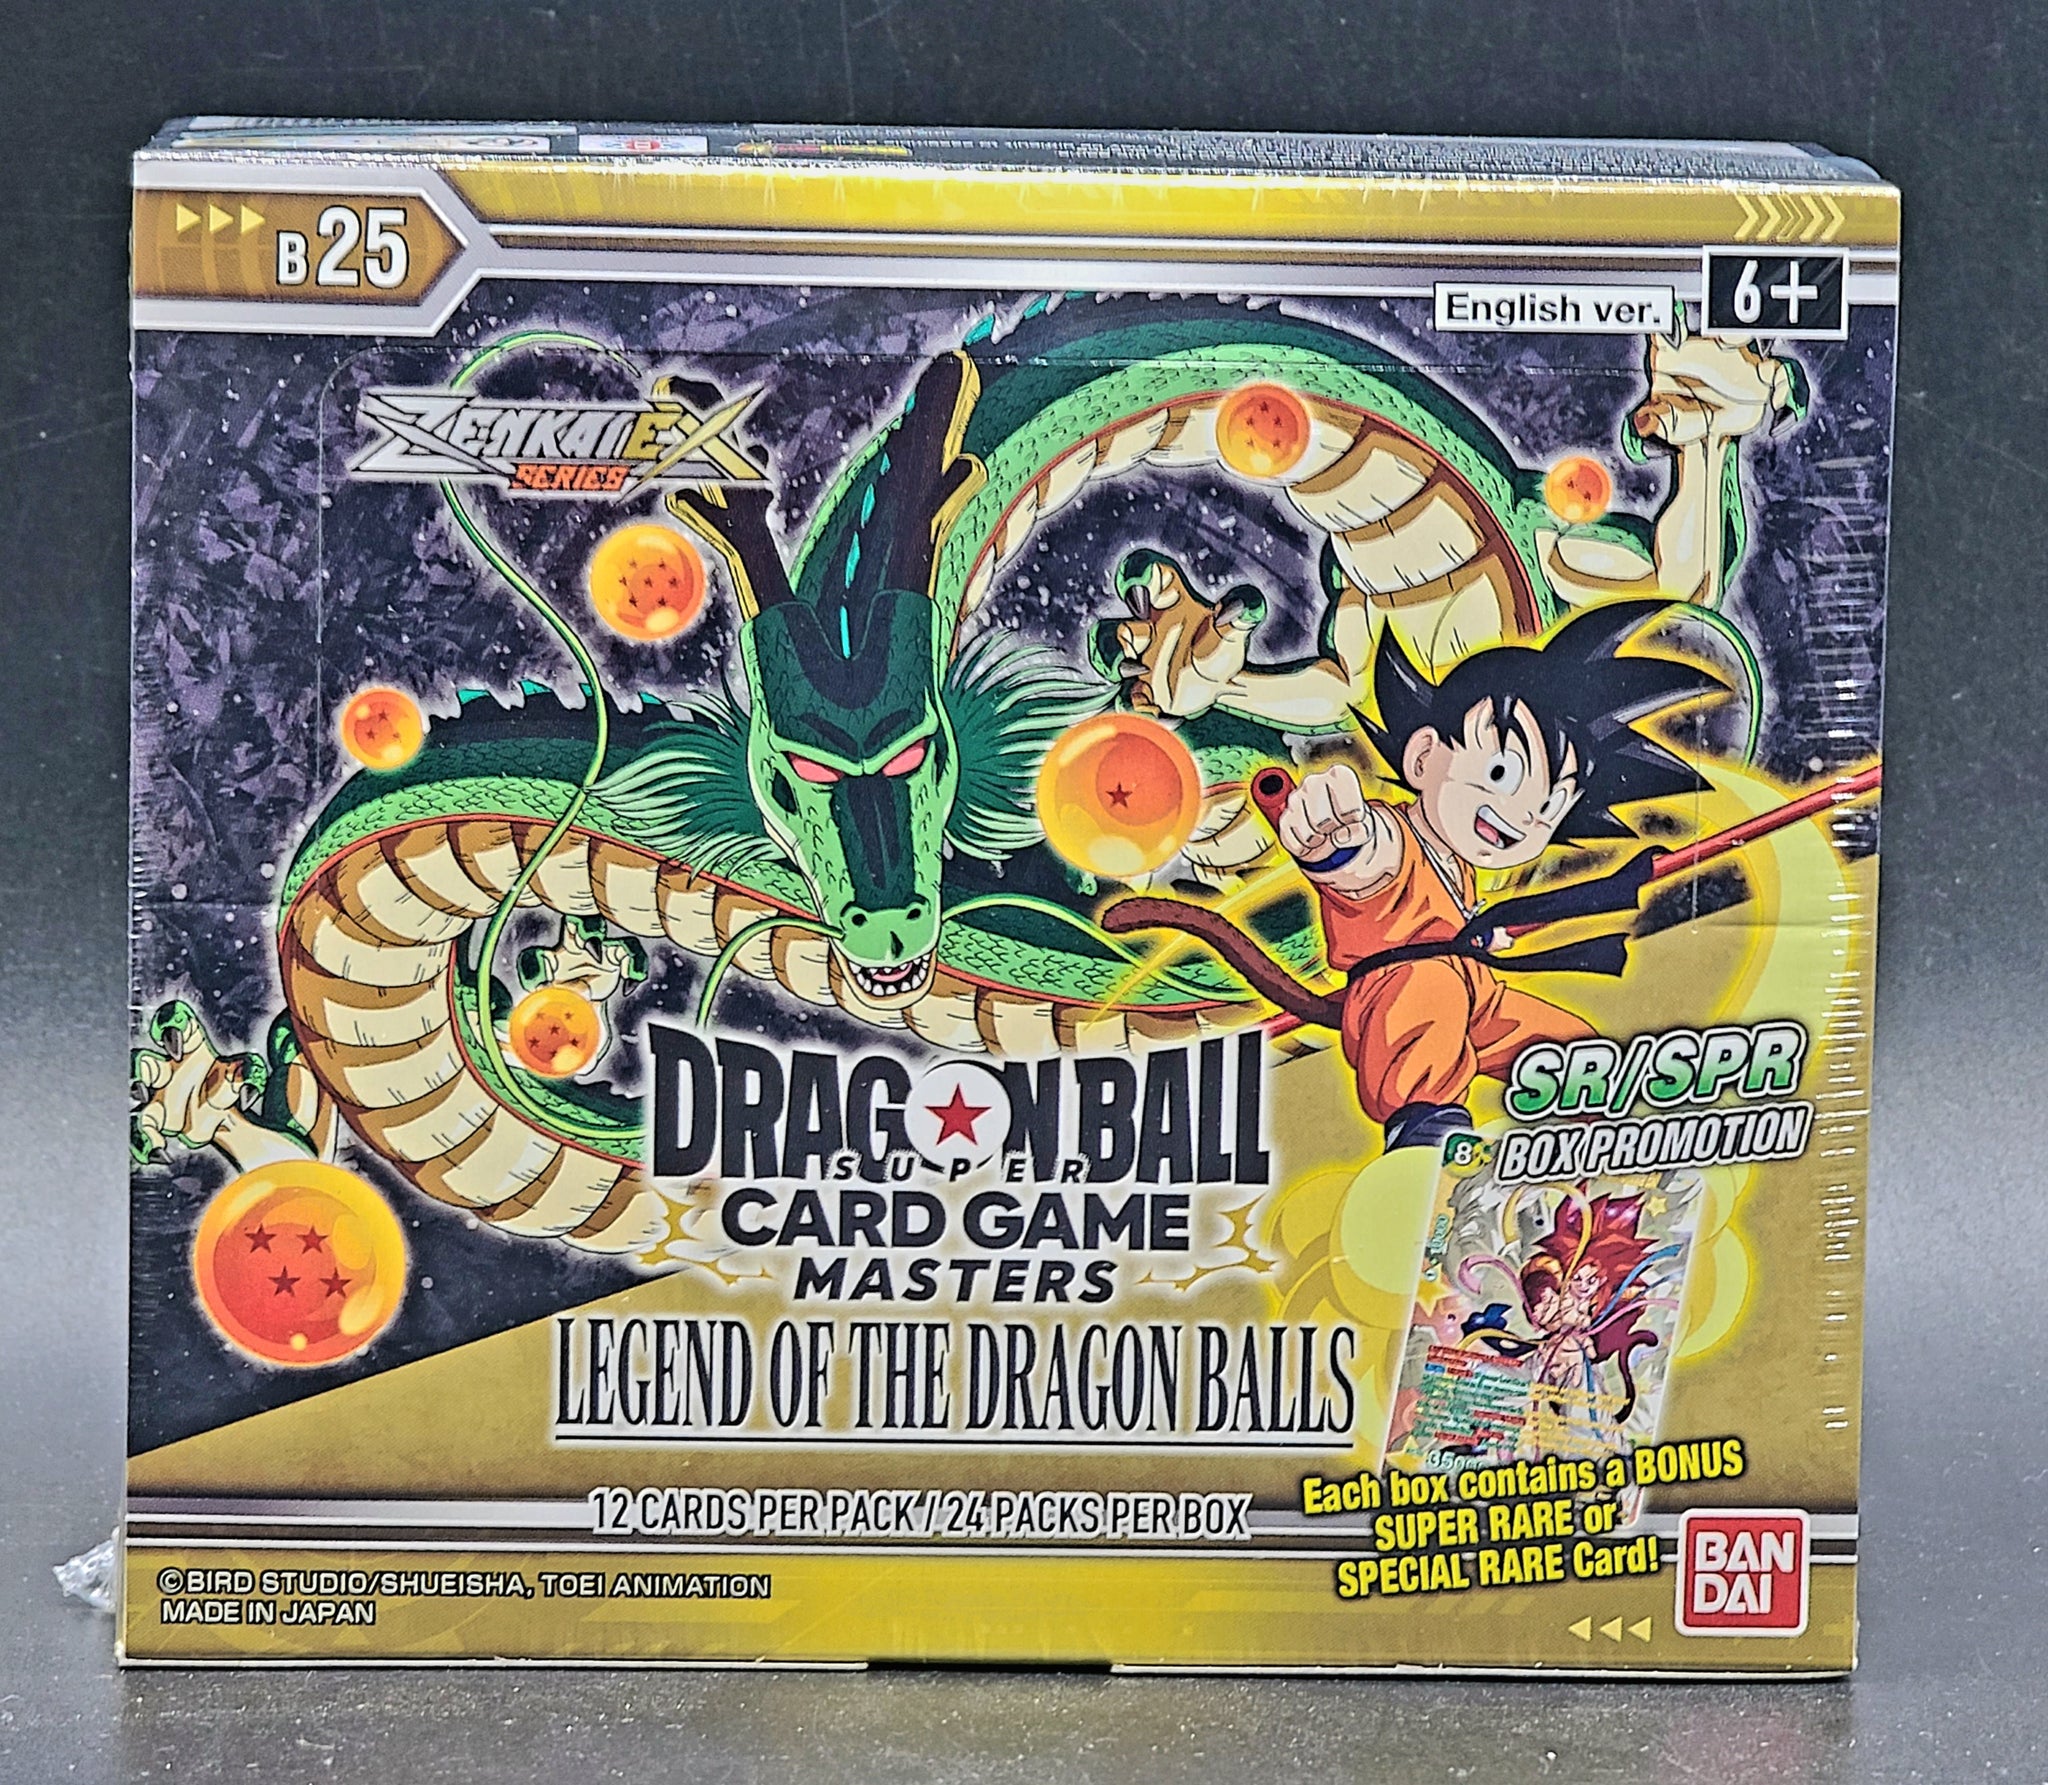 Dragon Ball Super: Legend of the Dragon Balls Booster Box (BT25)